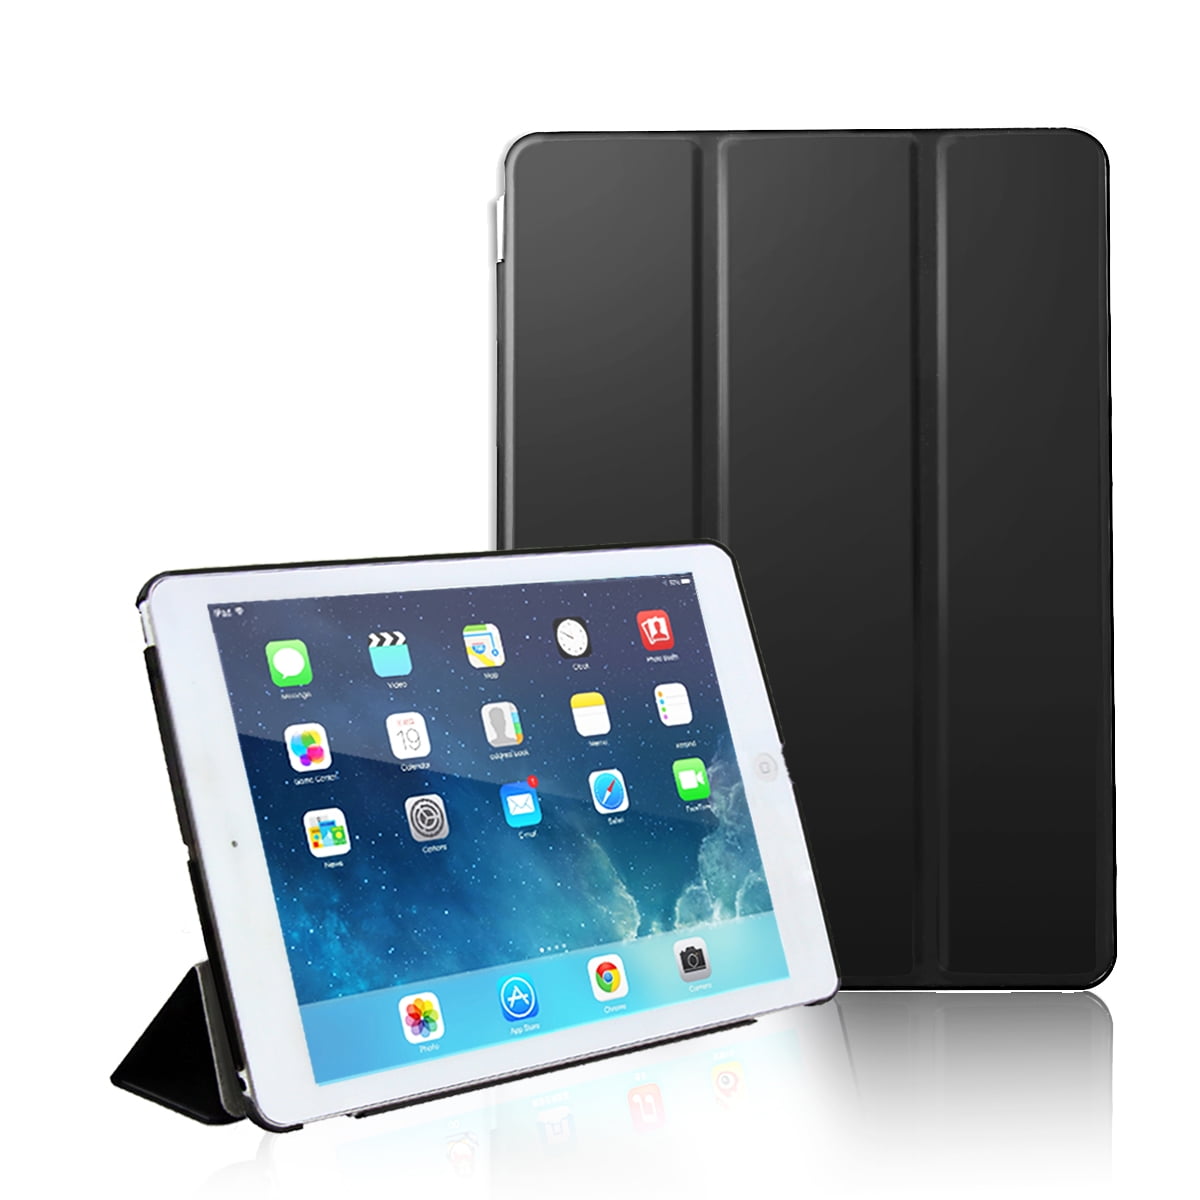 Foldable Magnetic Leather Smart Cover Hard Back Case For Apple iPad mini 1/2/3 